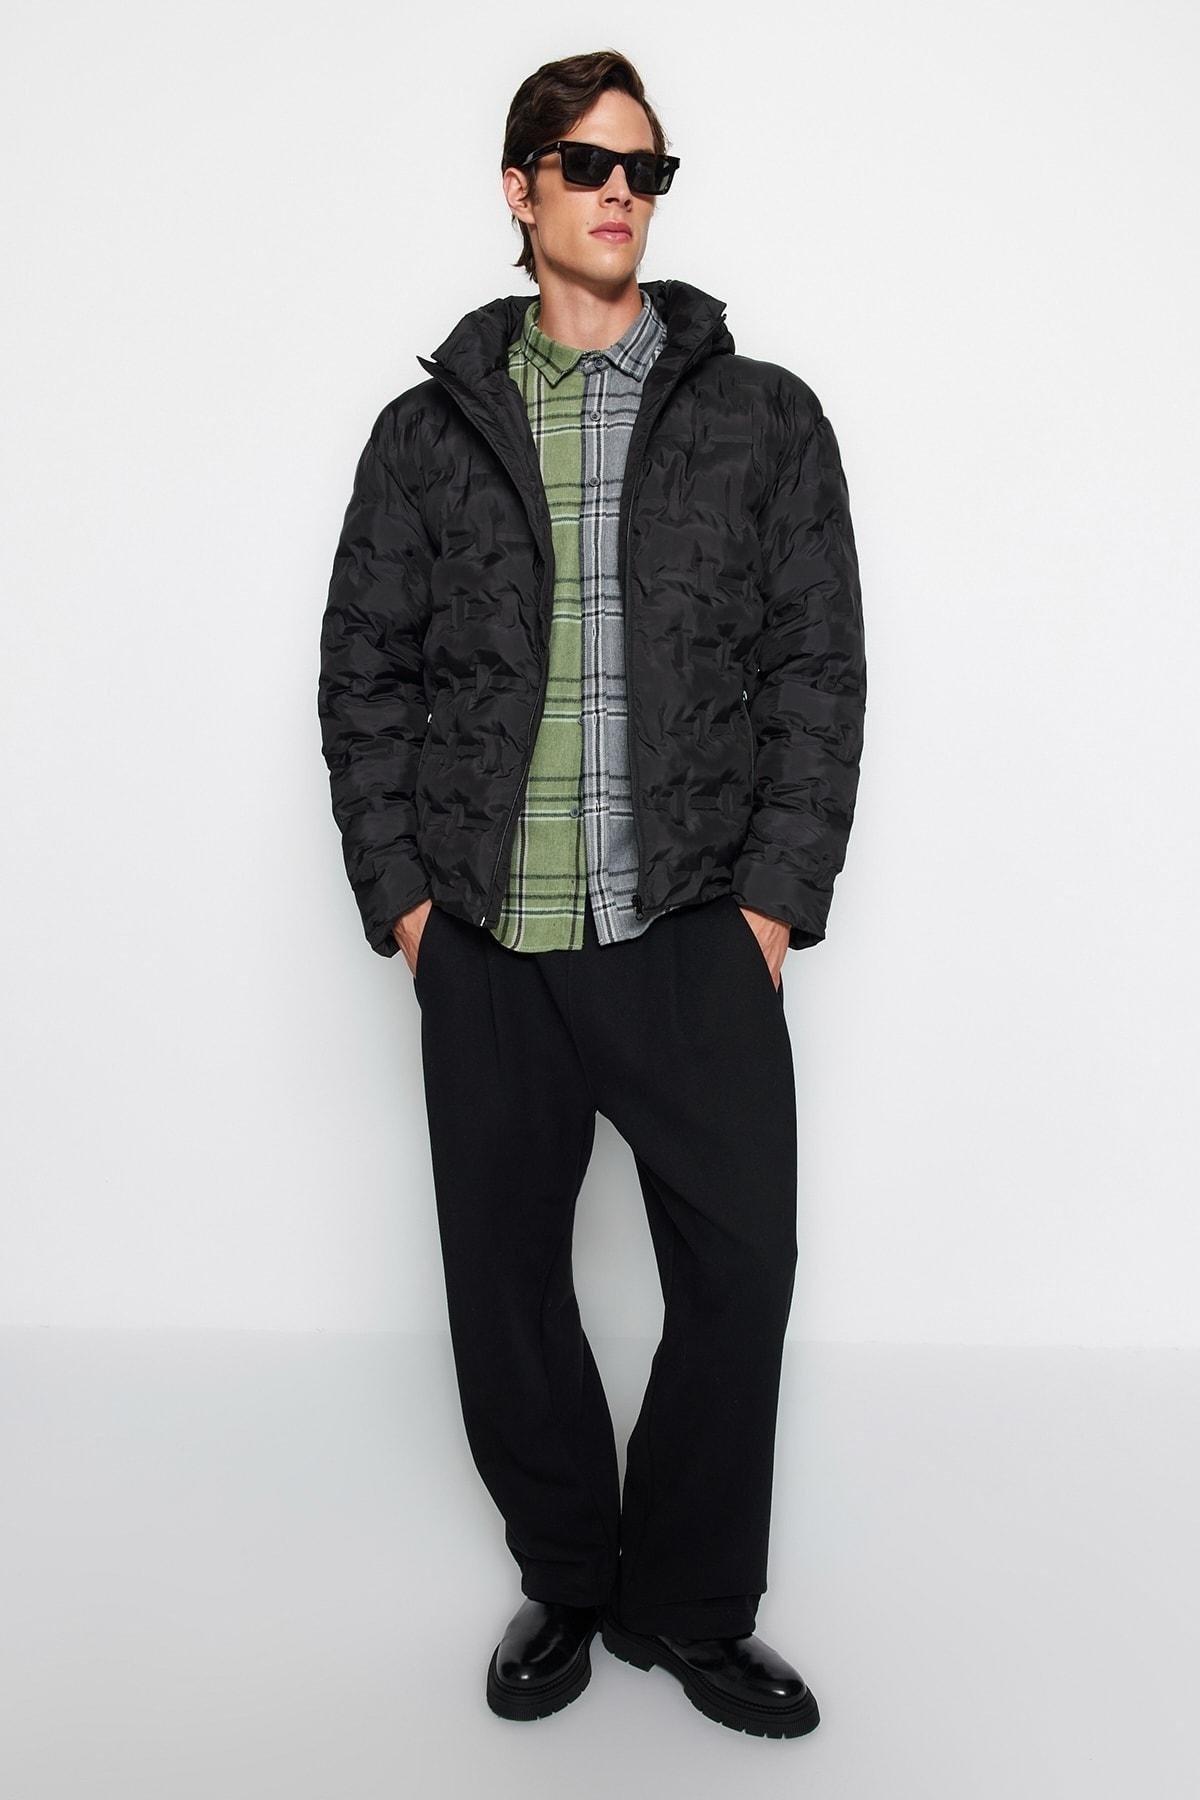 Trendyol - Black Hooded Textured Puffy Winter Coat